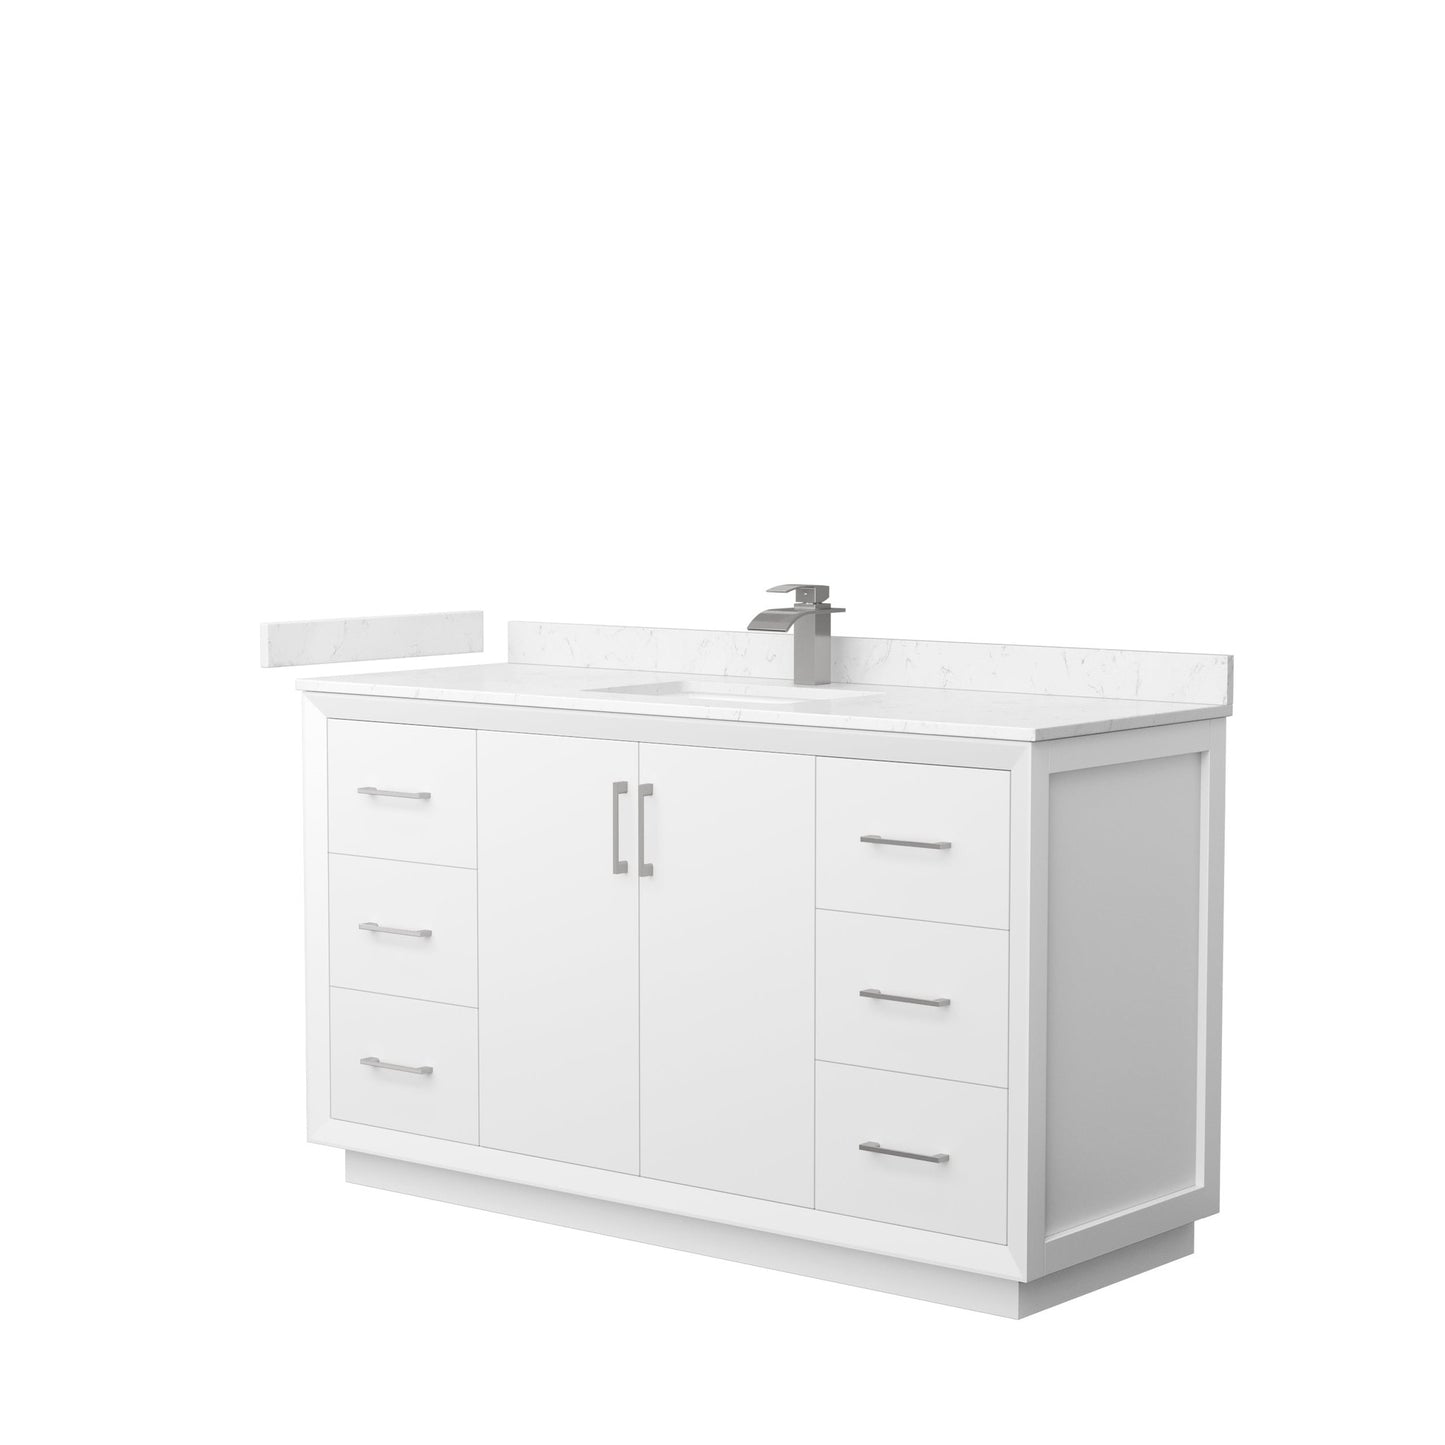 Wyndham Collection Strada 60" Single Bathroom Vanity in White, Carrara Cultured Marble Countertop, Undermount Square Sink, Brushed Nickel Trim